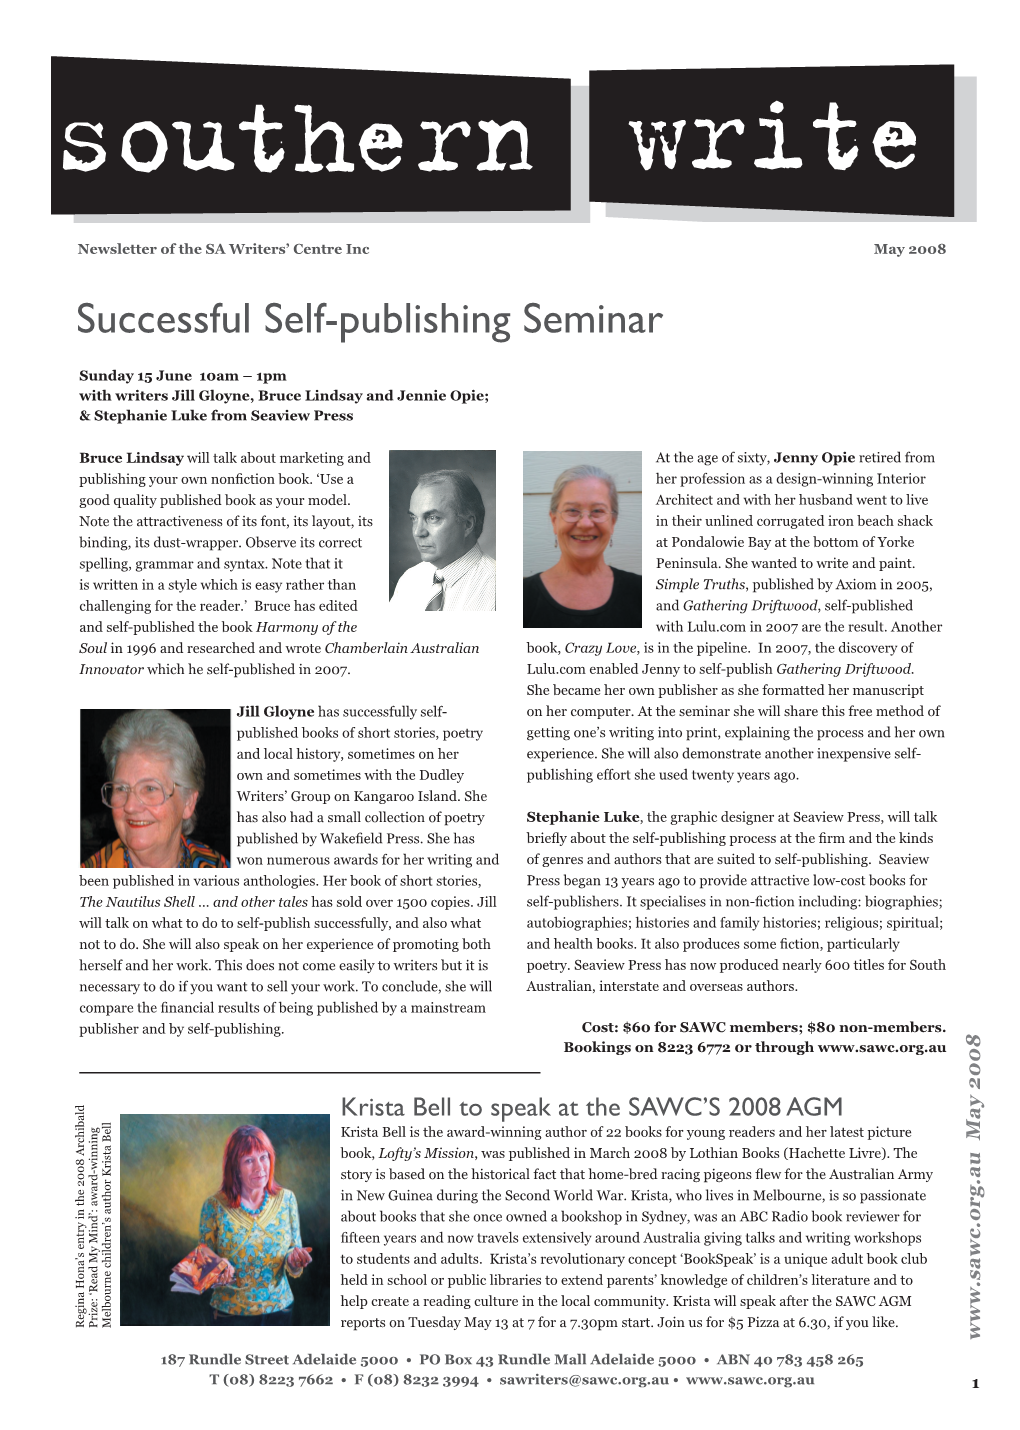 Successful Self-Publishing Seminar